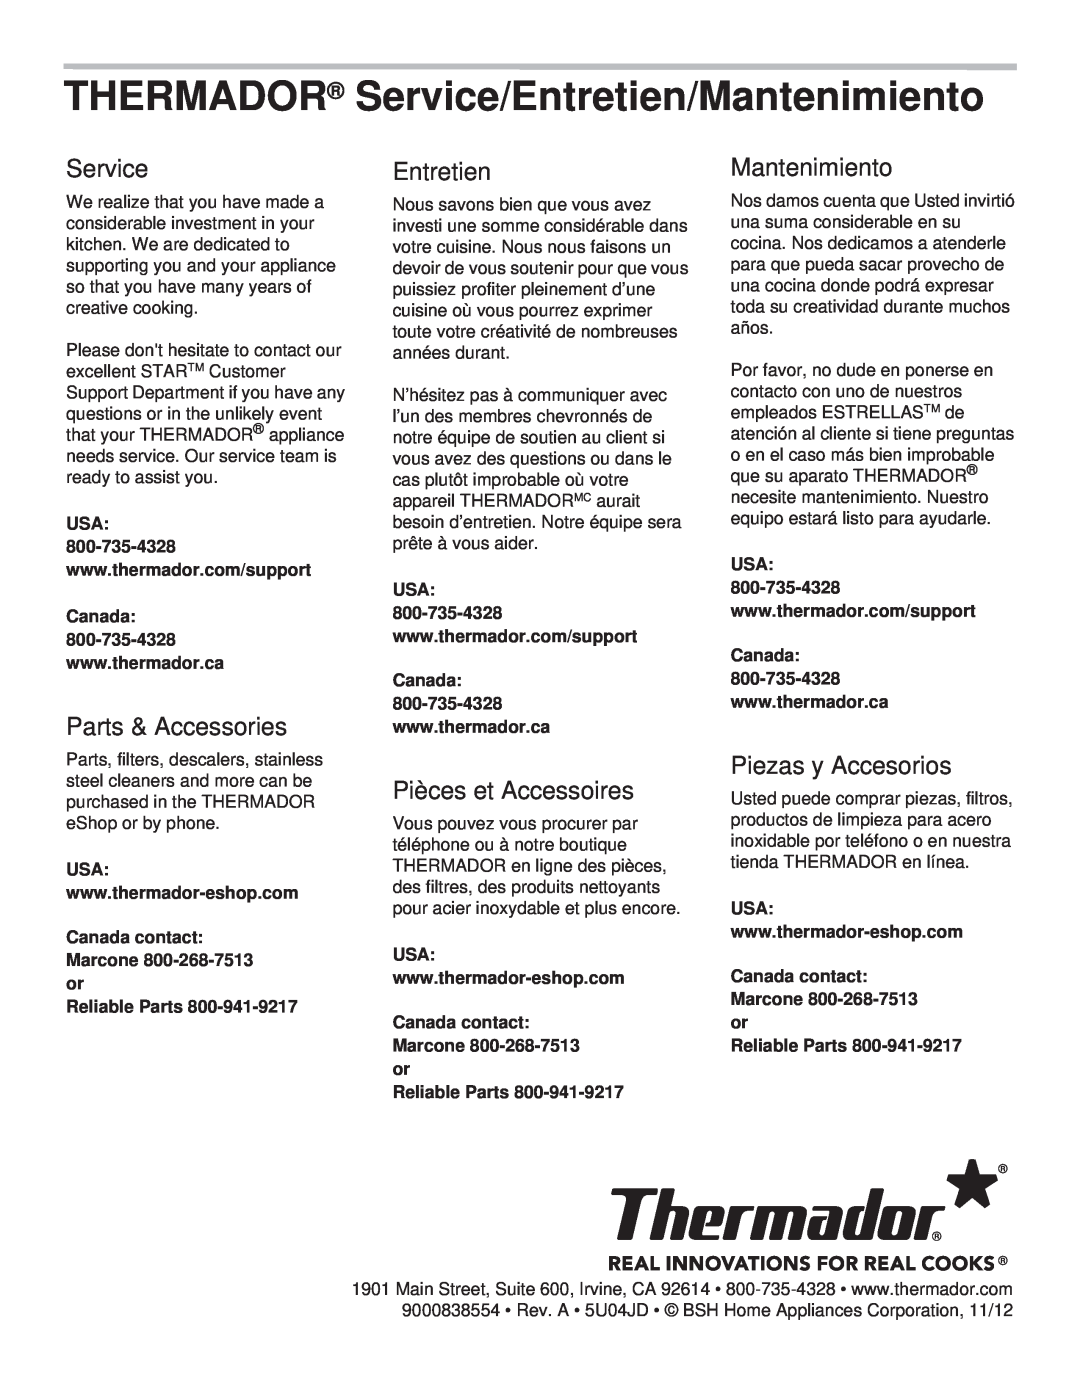 Thermador PH36HS THERMADOR Service/Entretien/Mantenimiento, Canada contact Marcone 800-268-7513 or Reliable Parts 